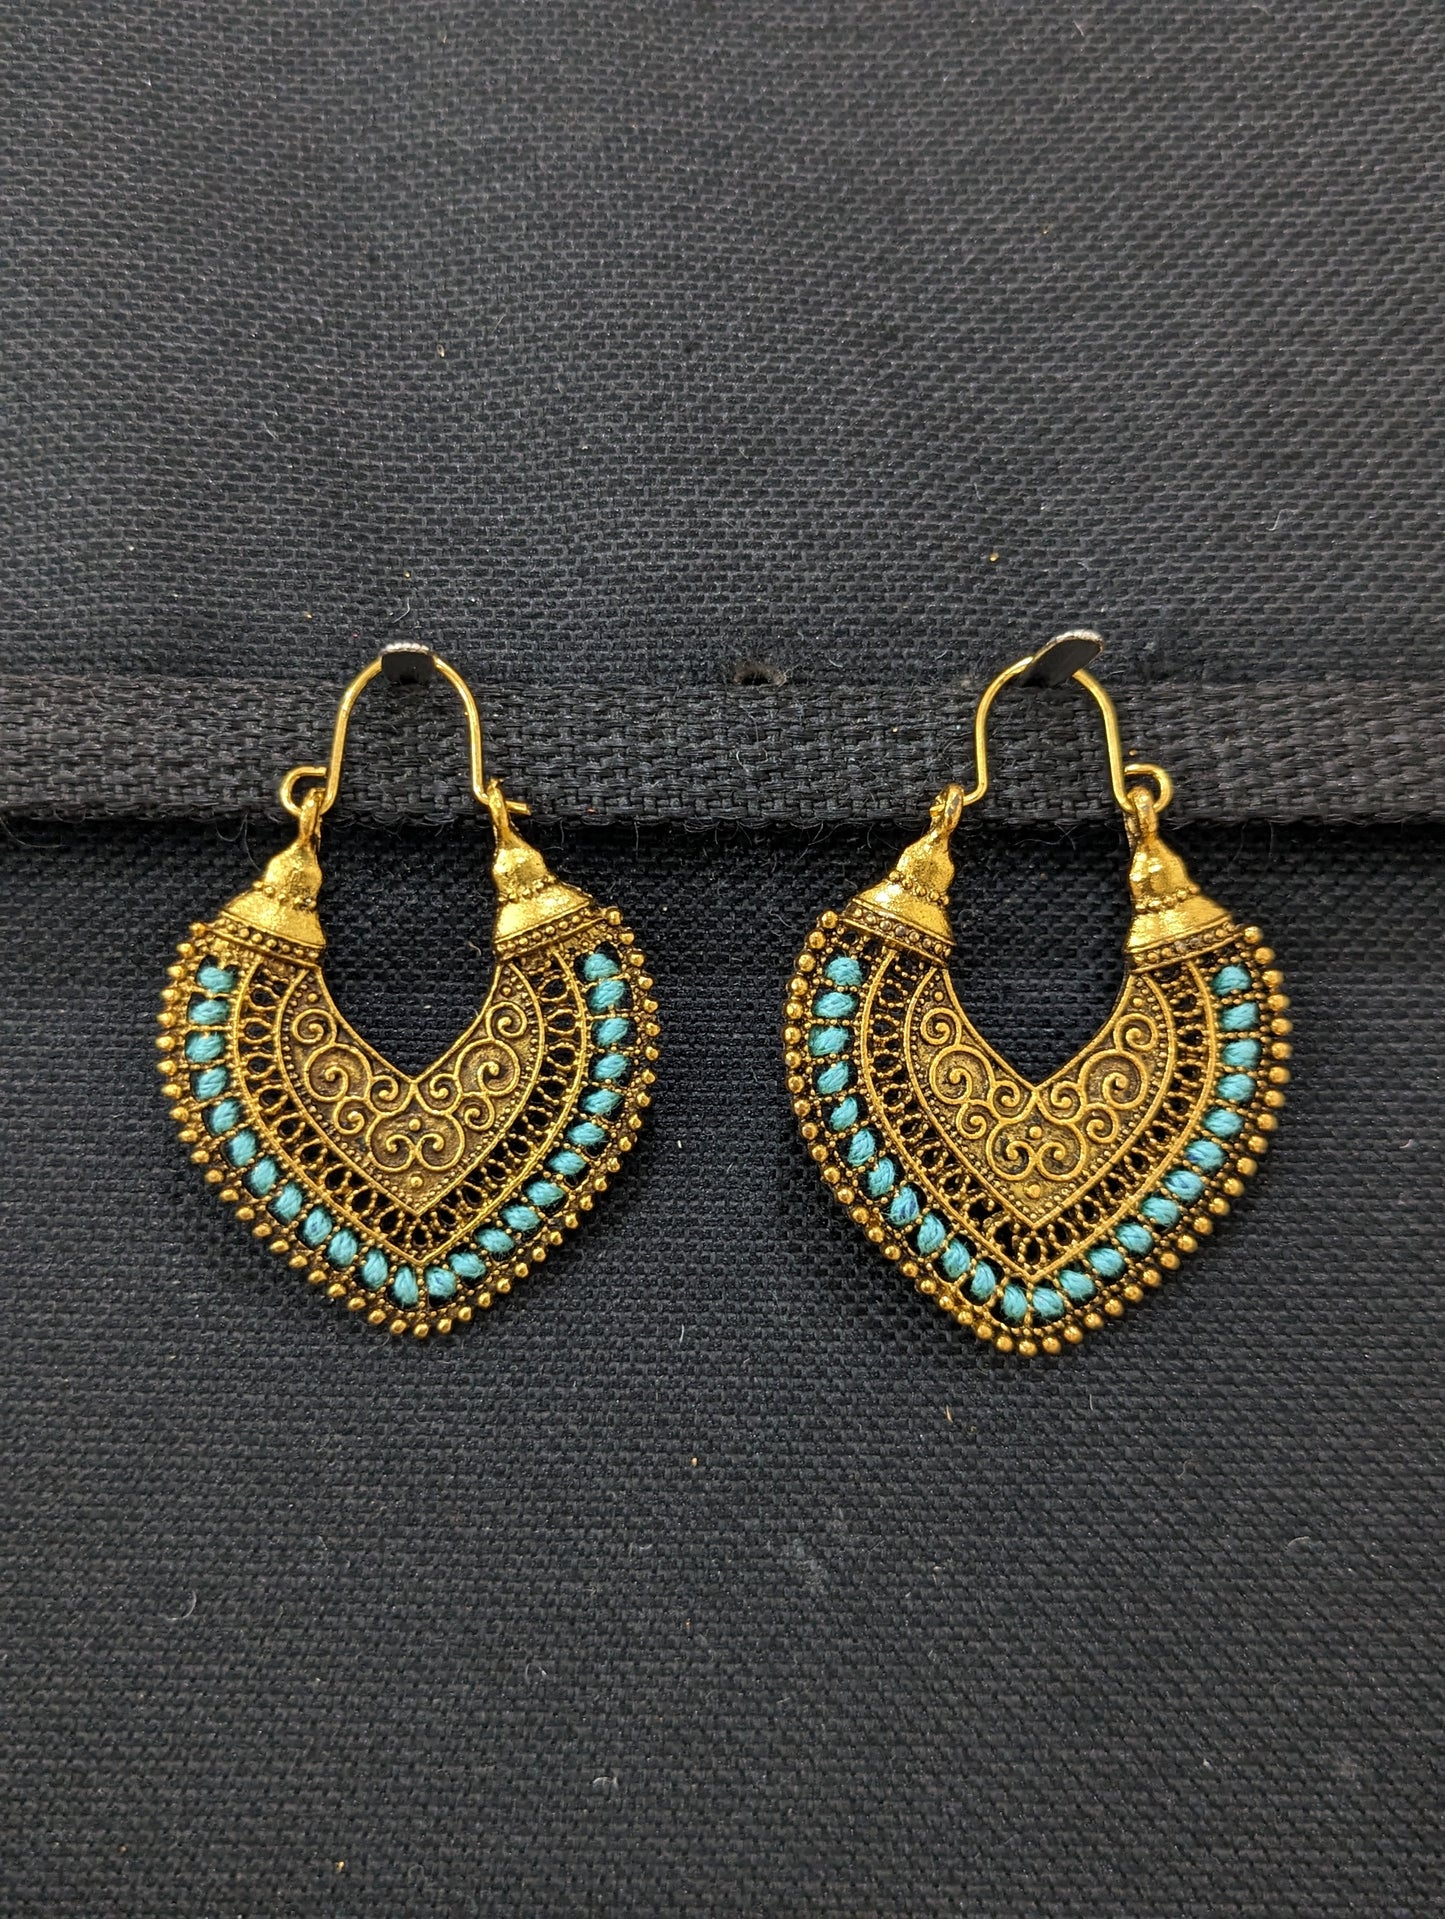 Antique gold oxidized hoop Earrings - 2 designs - Simpliful